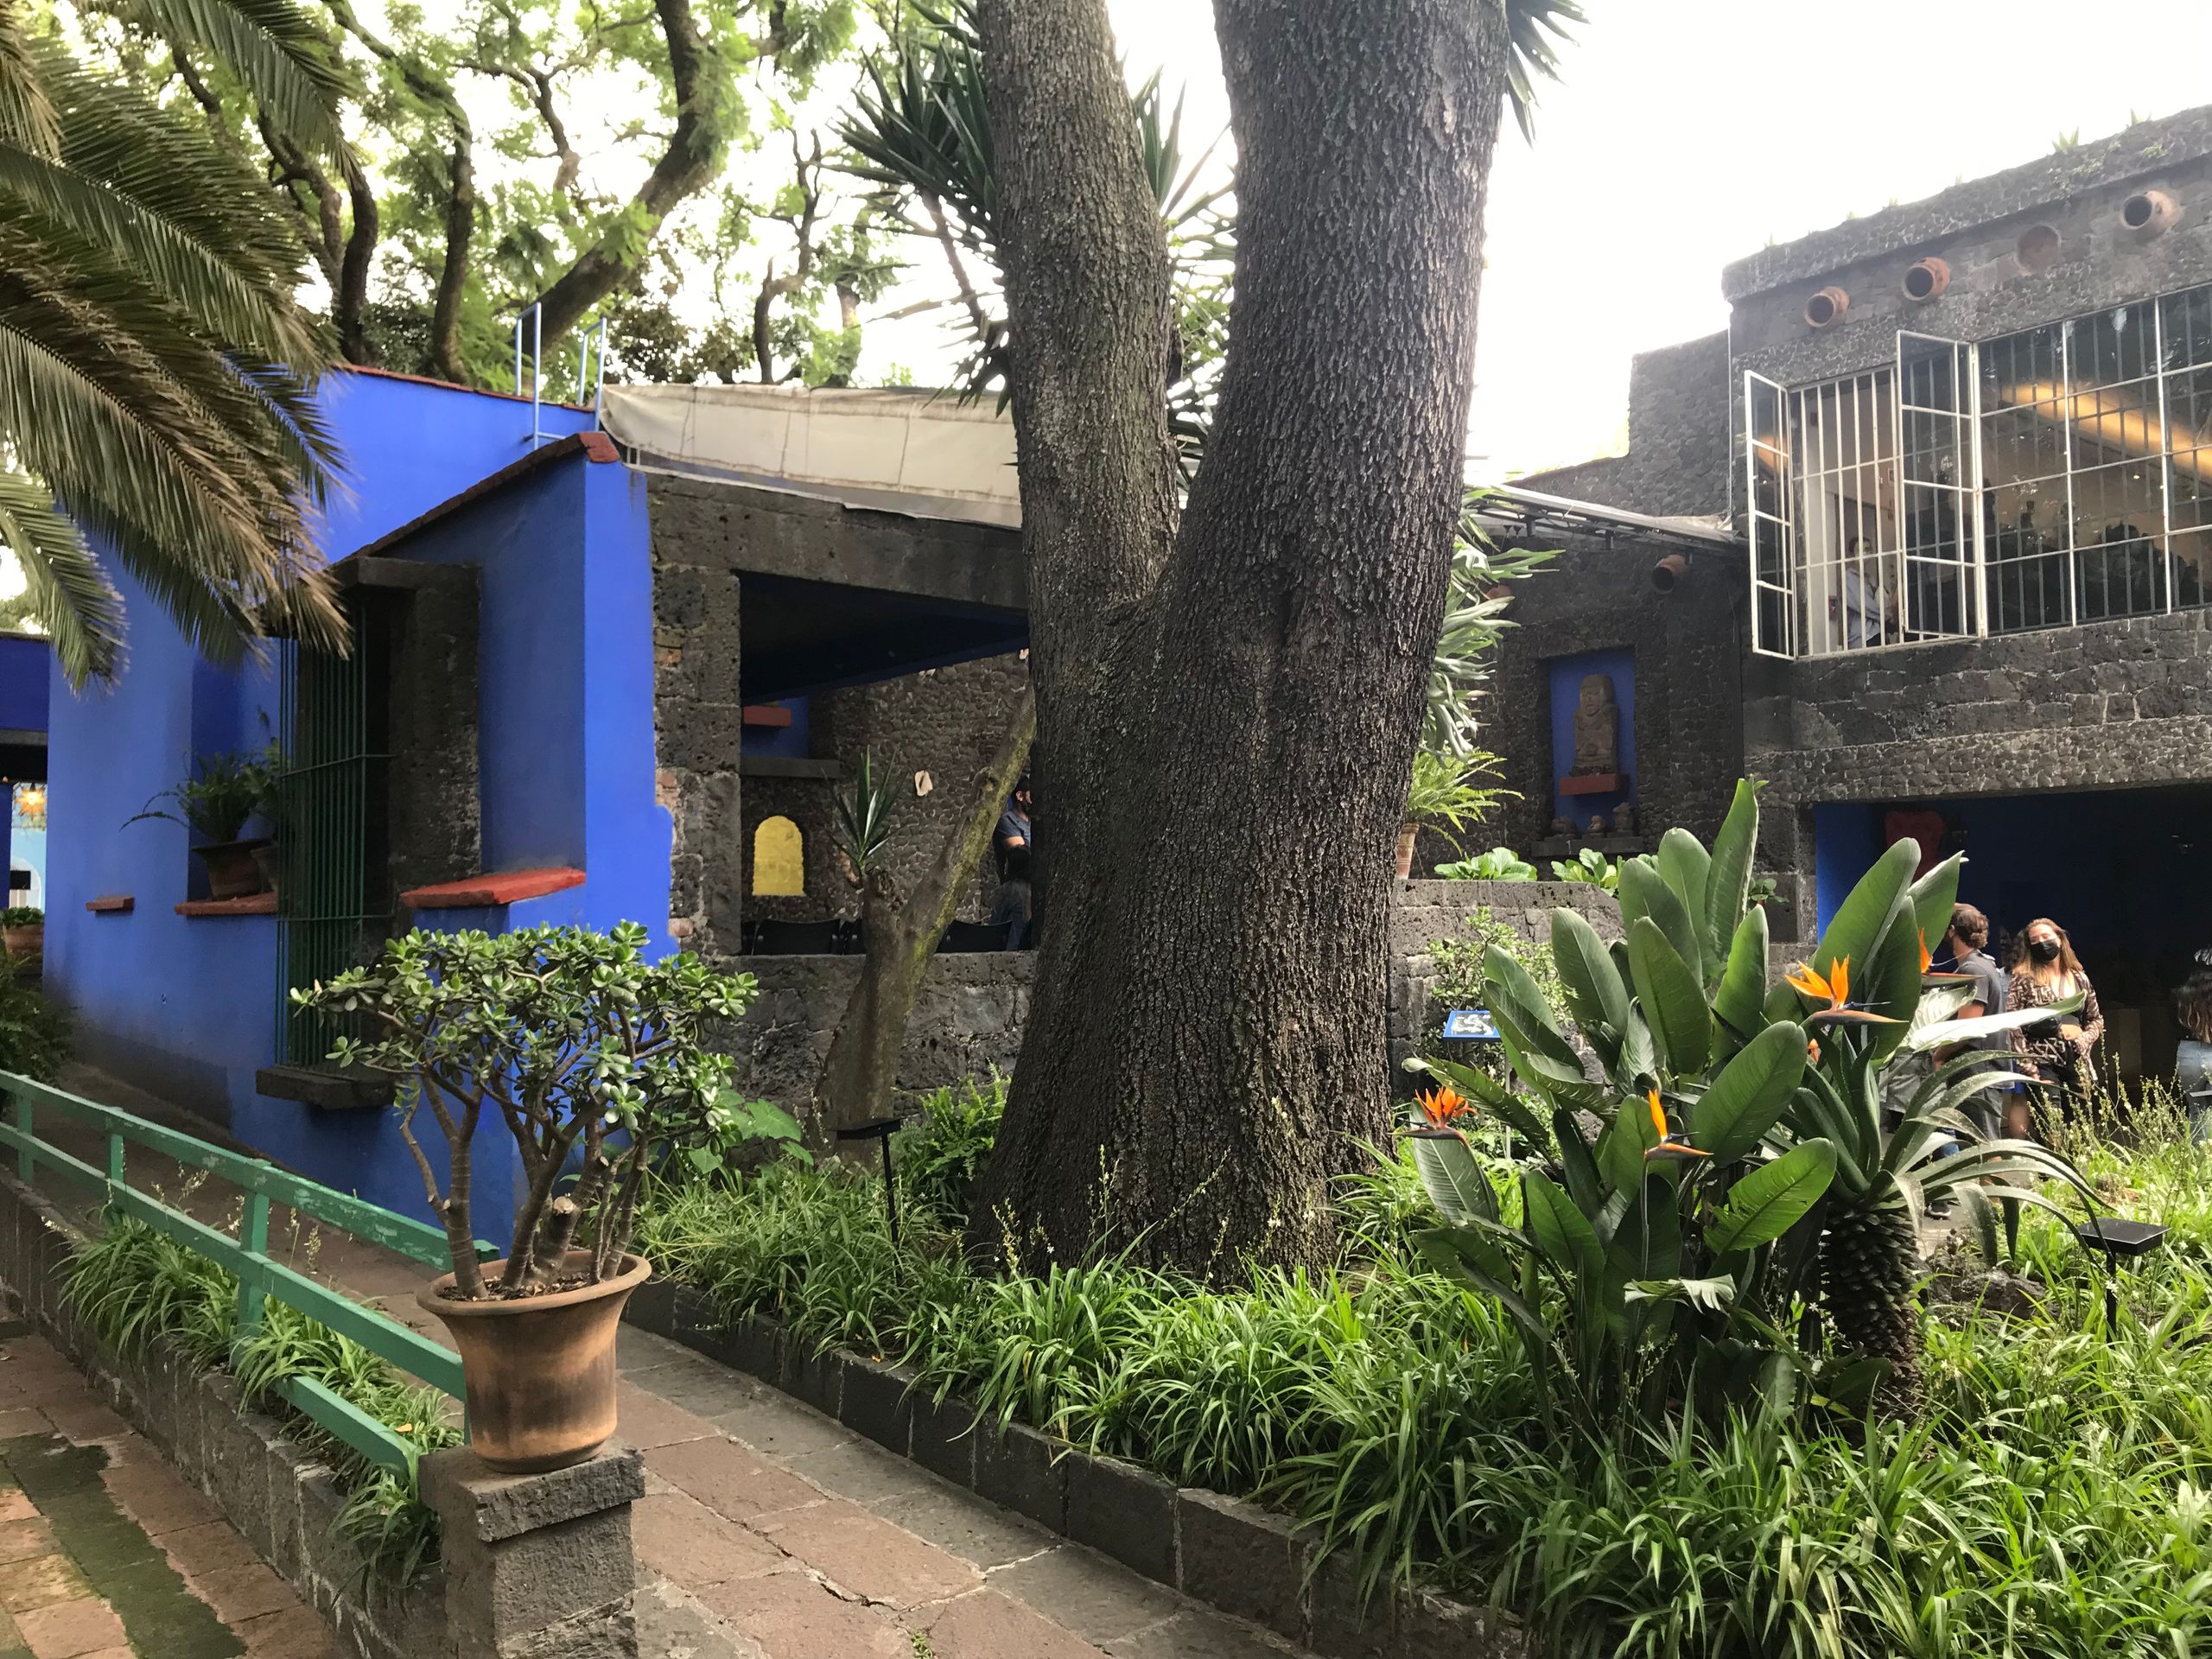 Frida Kahlo Museum in the garden